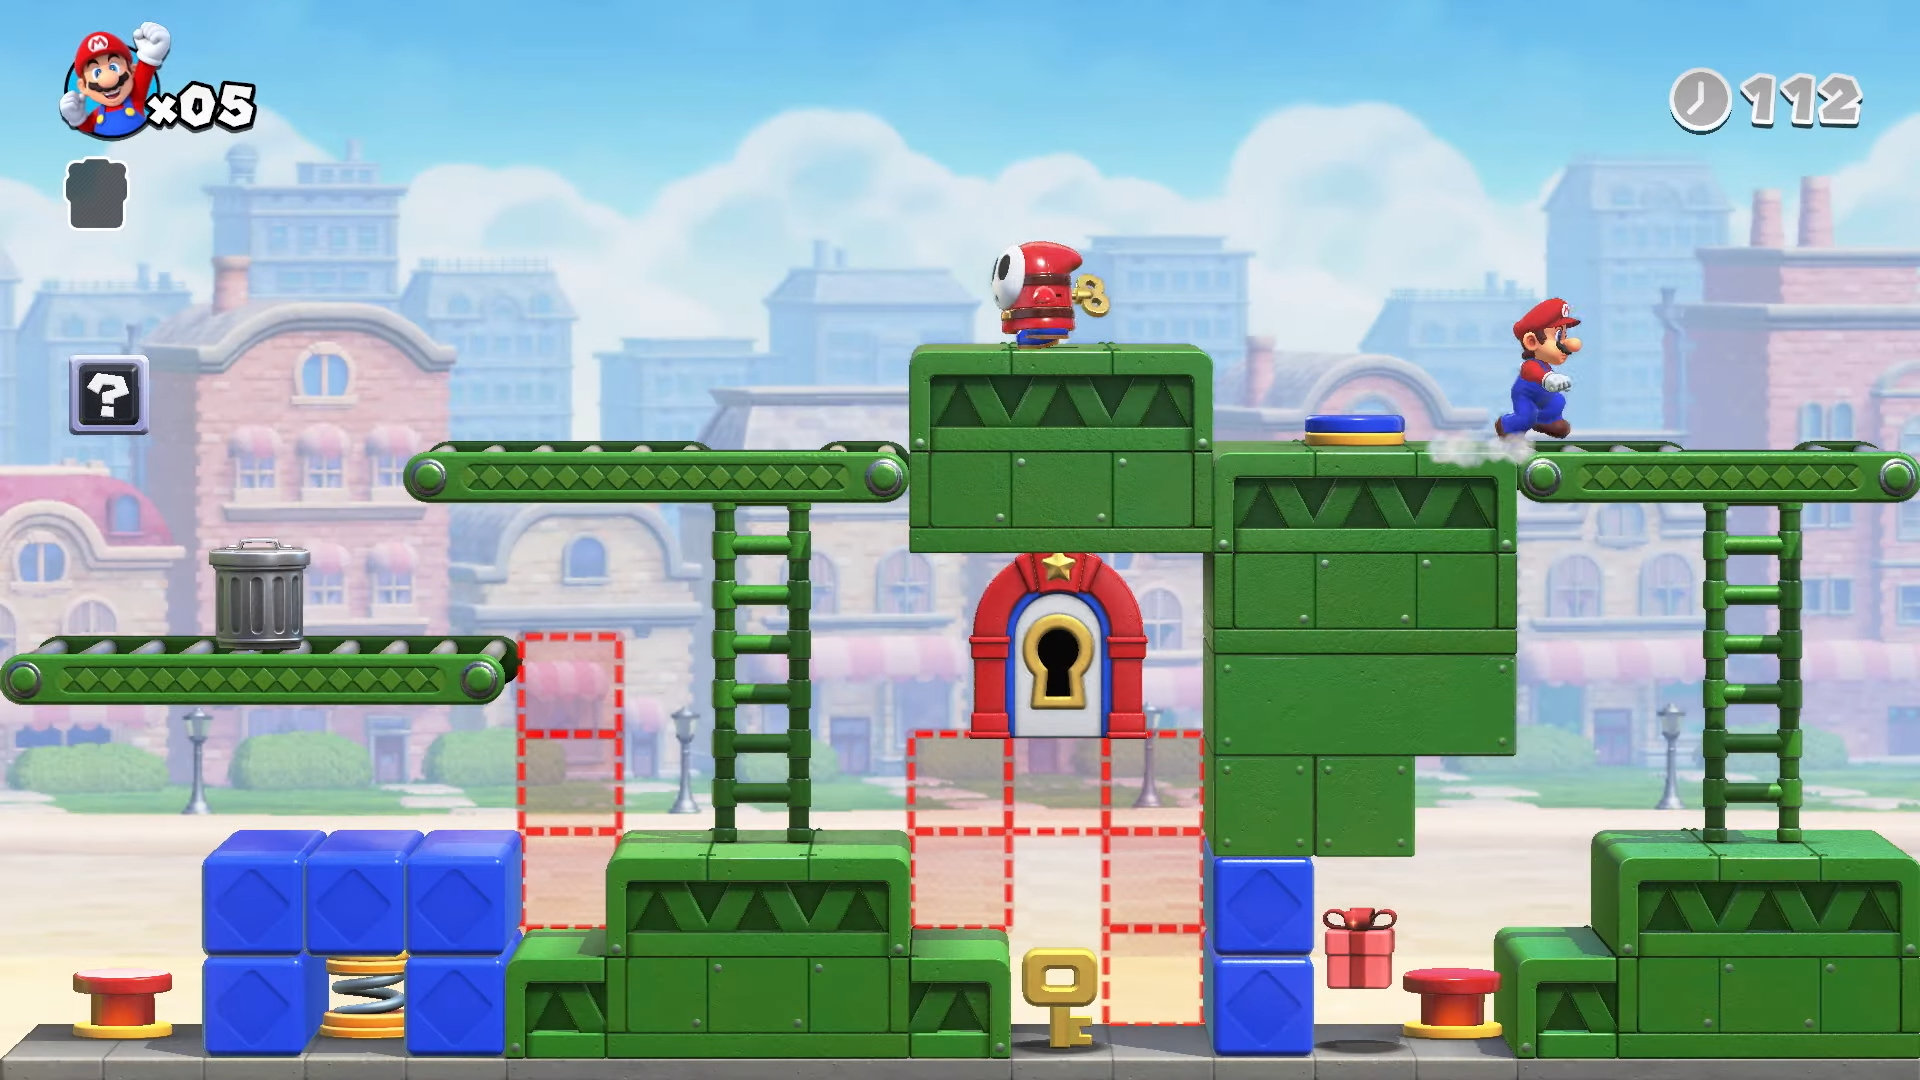 Mario vs. Donkey Kong - Official Announcement Trailer